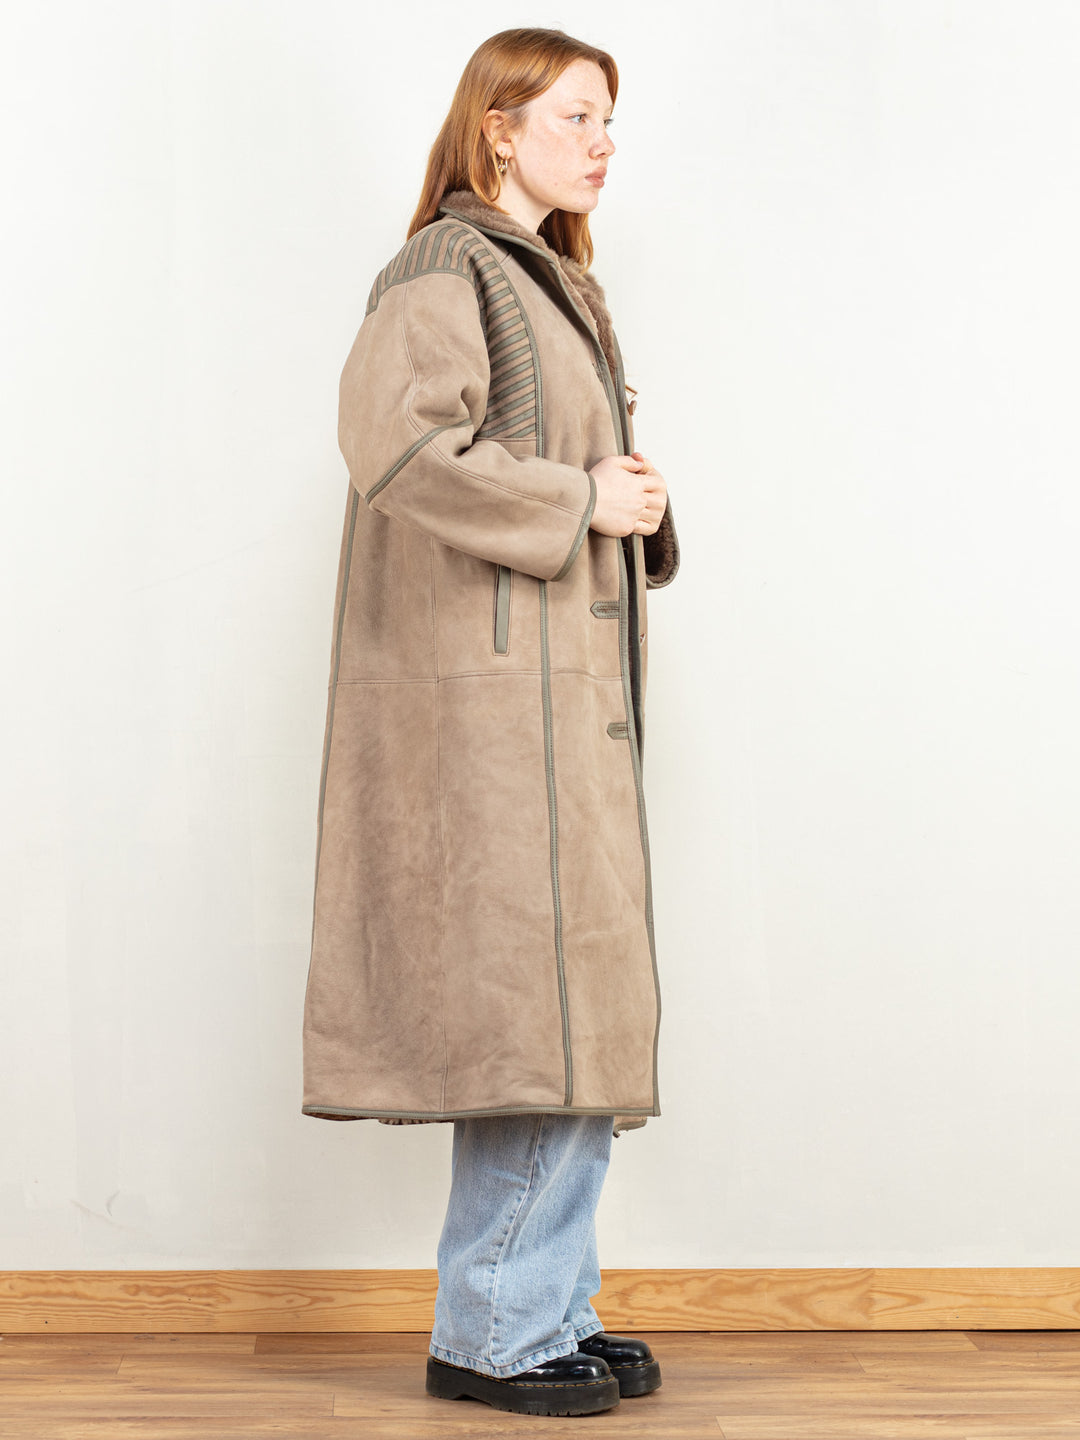 Sheepskin Shearl Coat 80’s vintage beige sheepskin chevron studio 54 winter shearling coat bianca jagger disco women size large L